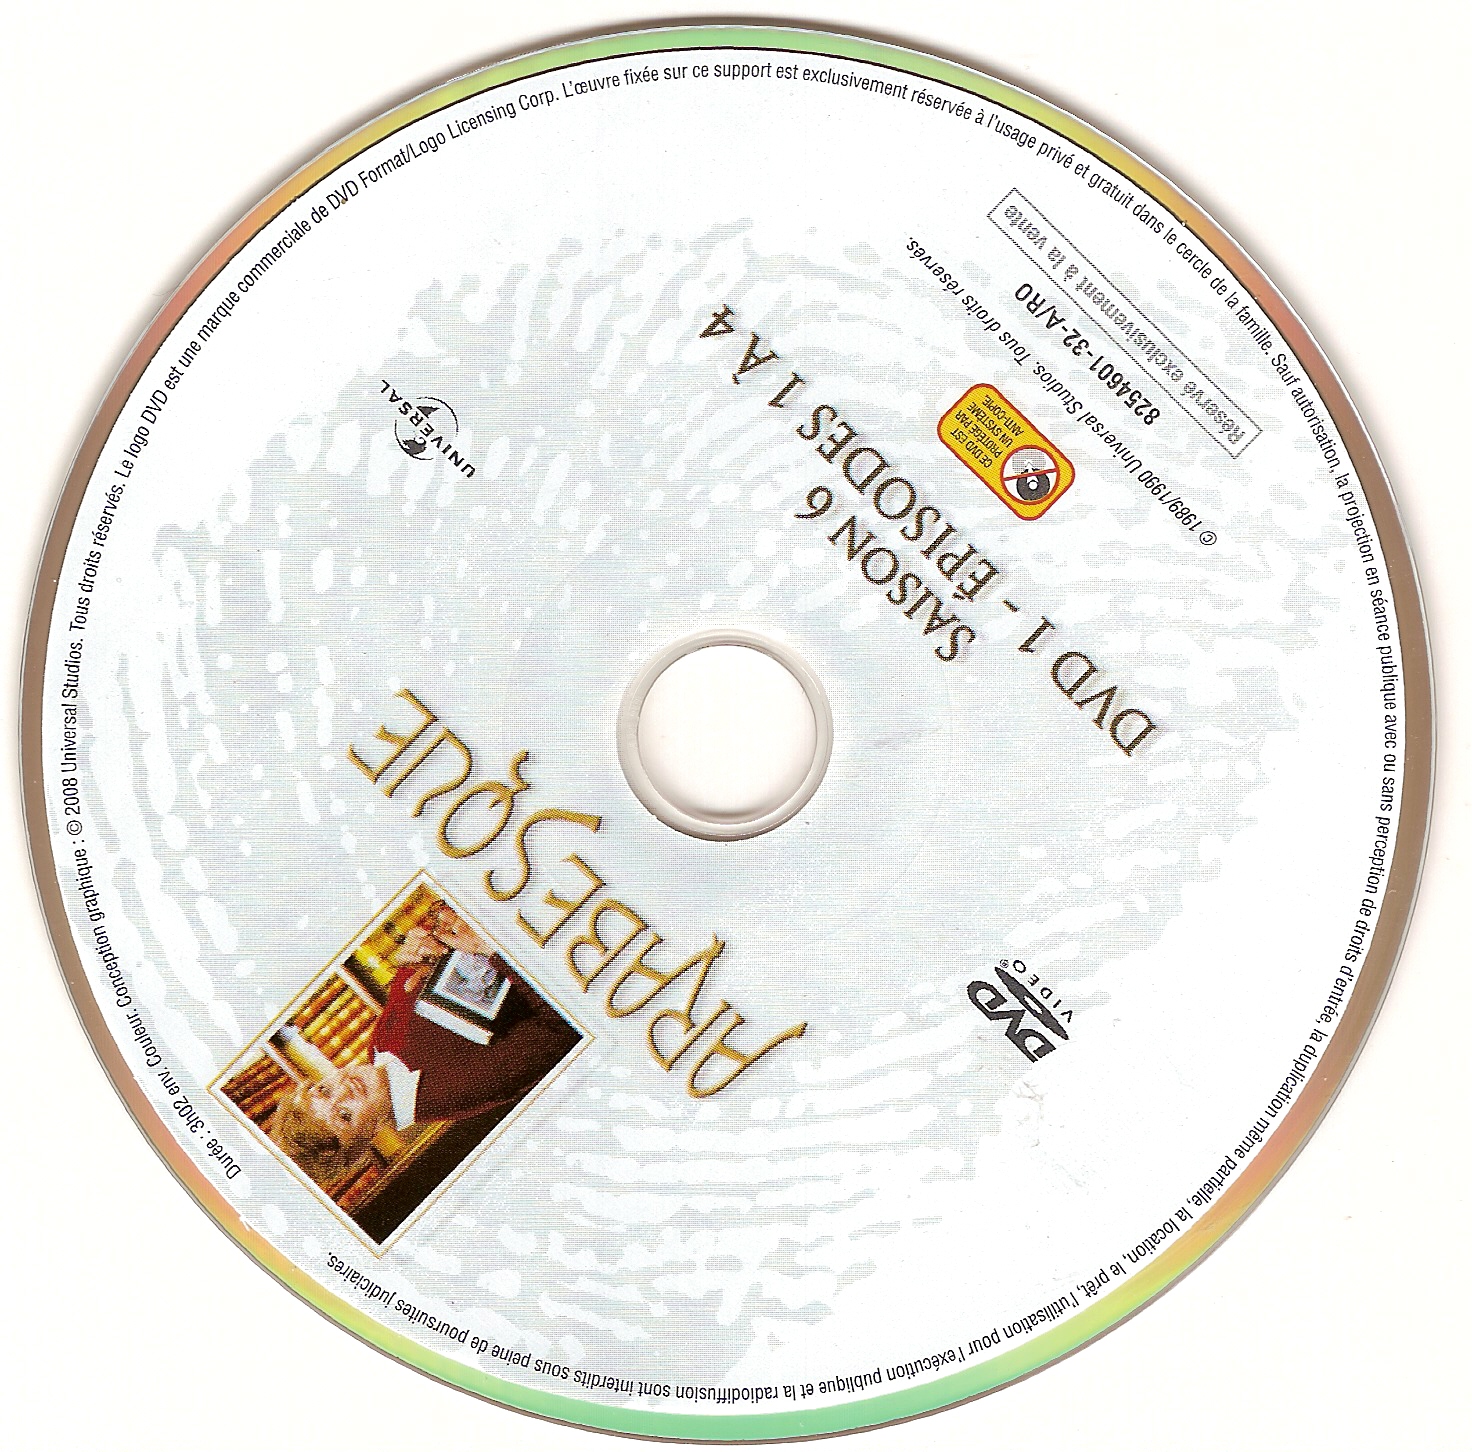 Arabesque saison 6 DISC 1